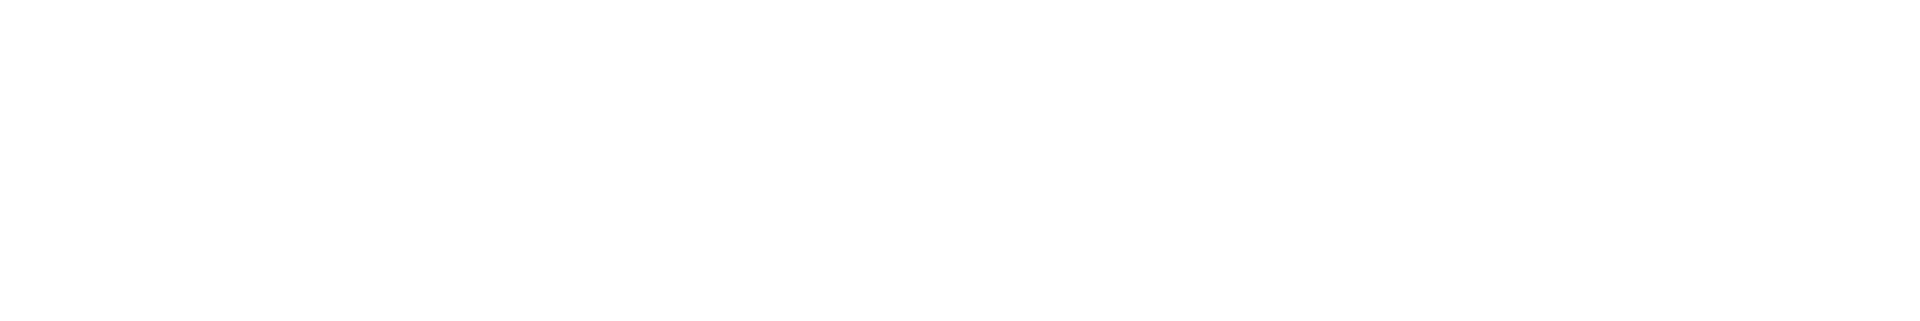 Thompson Web Services, Inc.